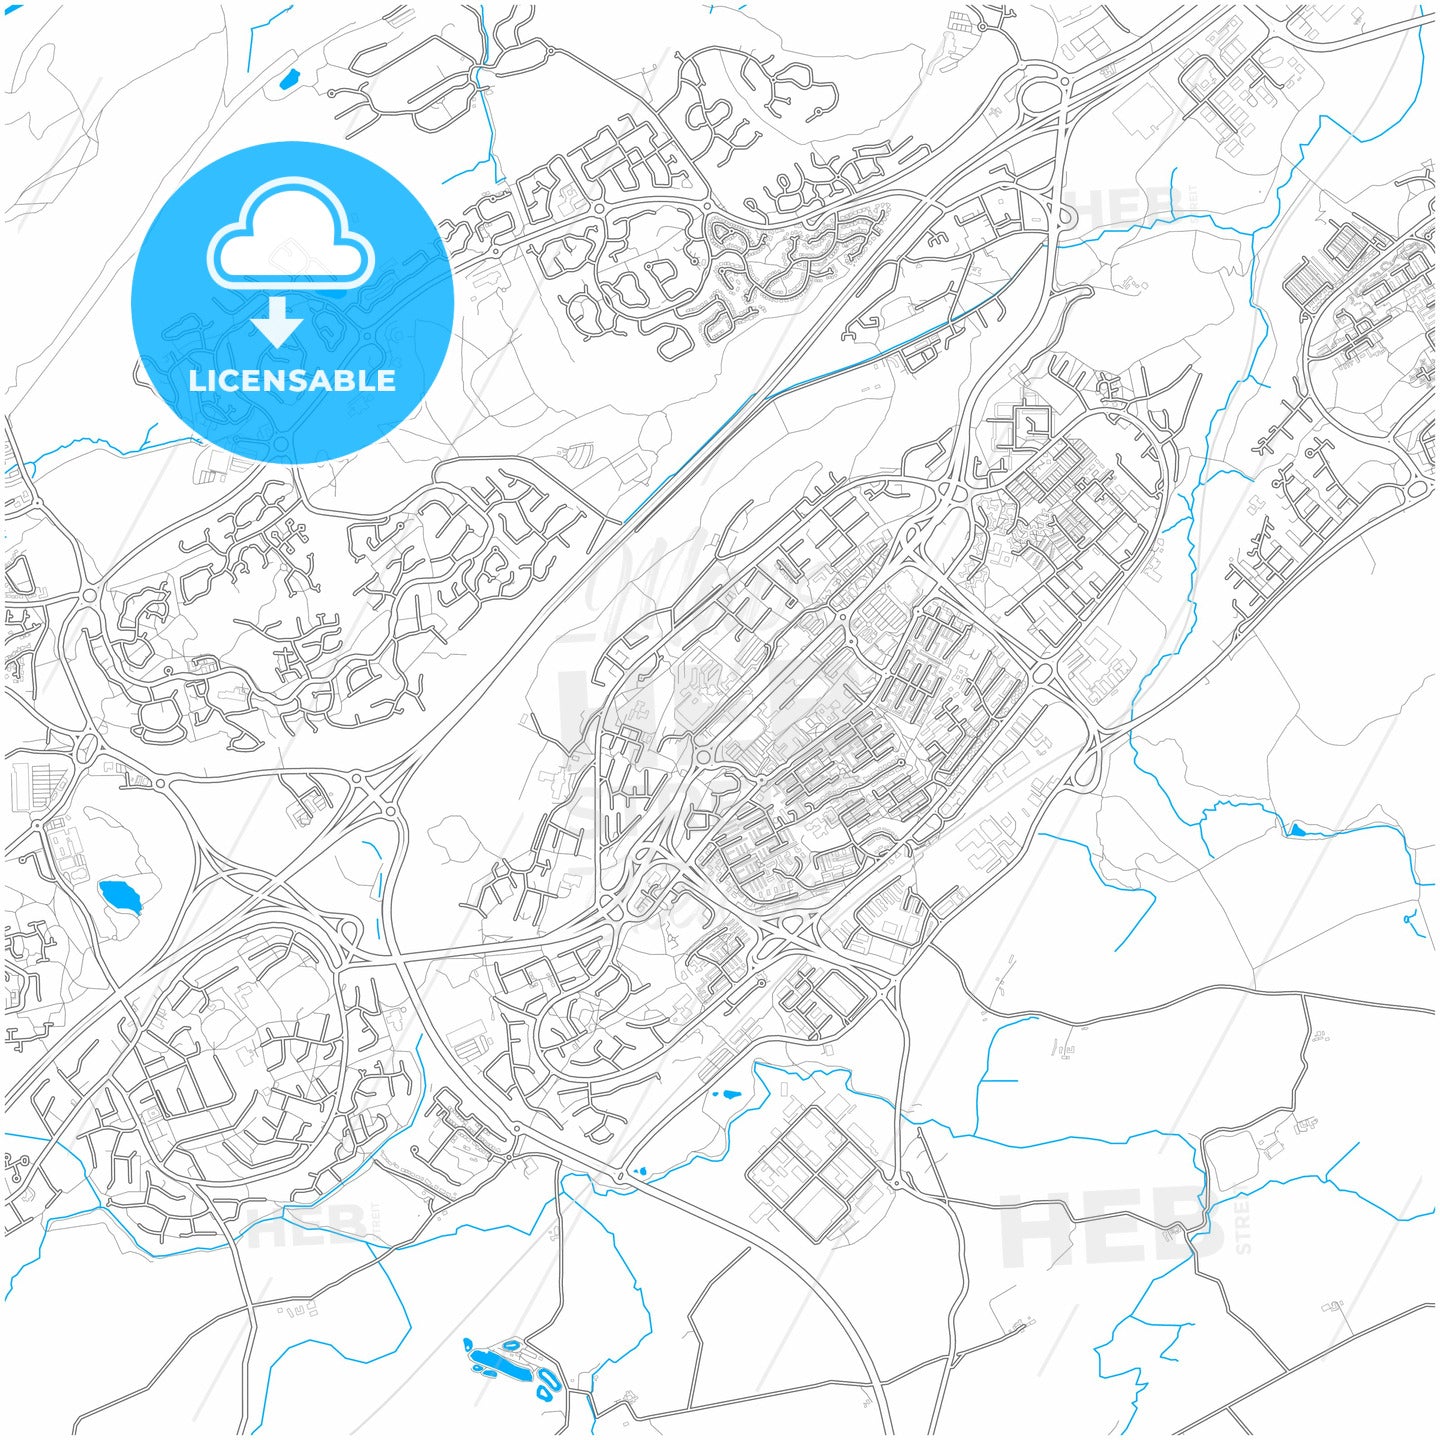 Cumbernauld, North Lanarkshire, Scotland, city map with high quality roads.